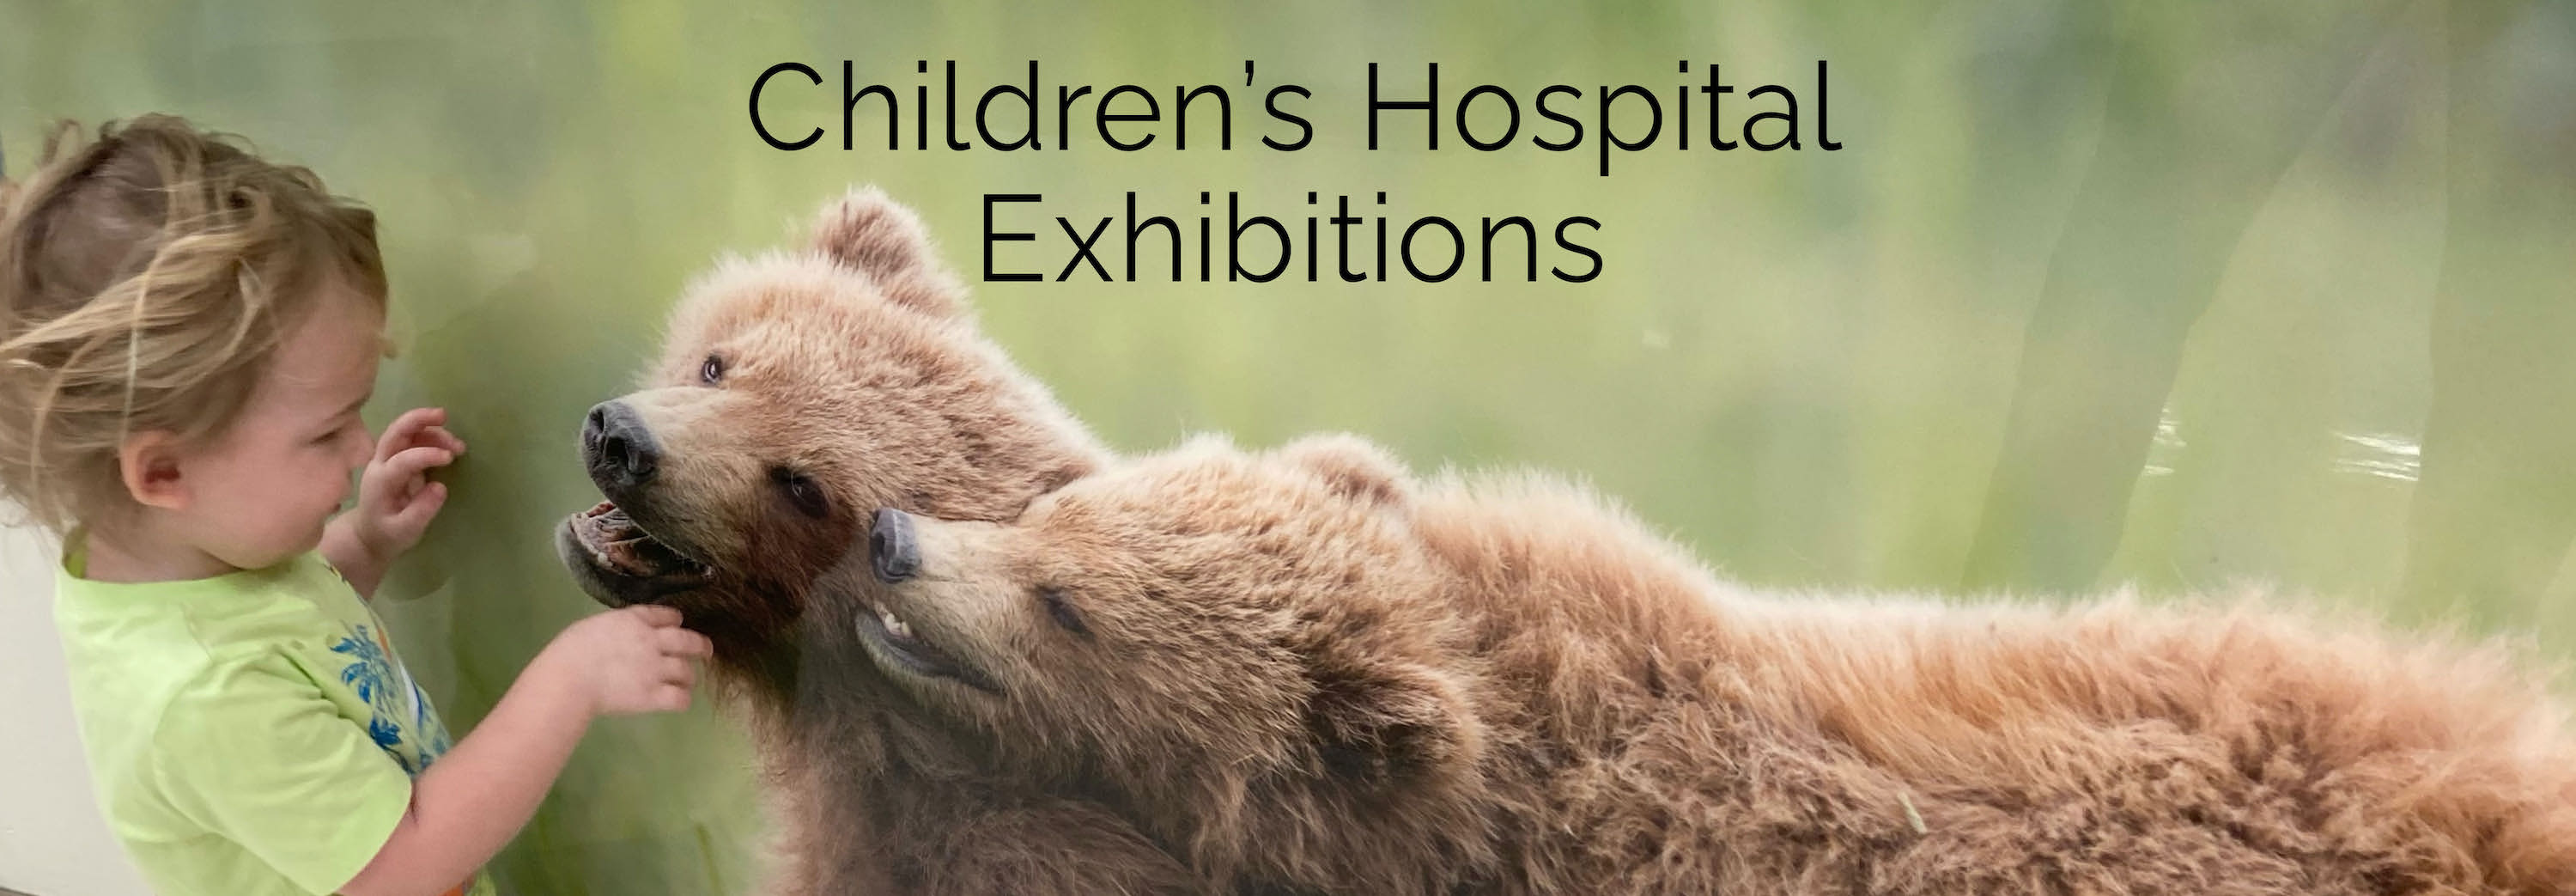 Children's Hospital Exhibitions